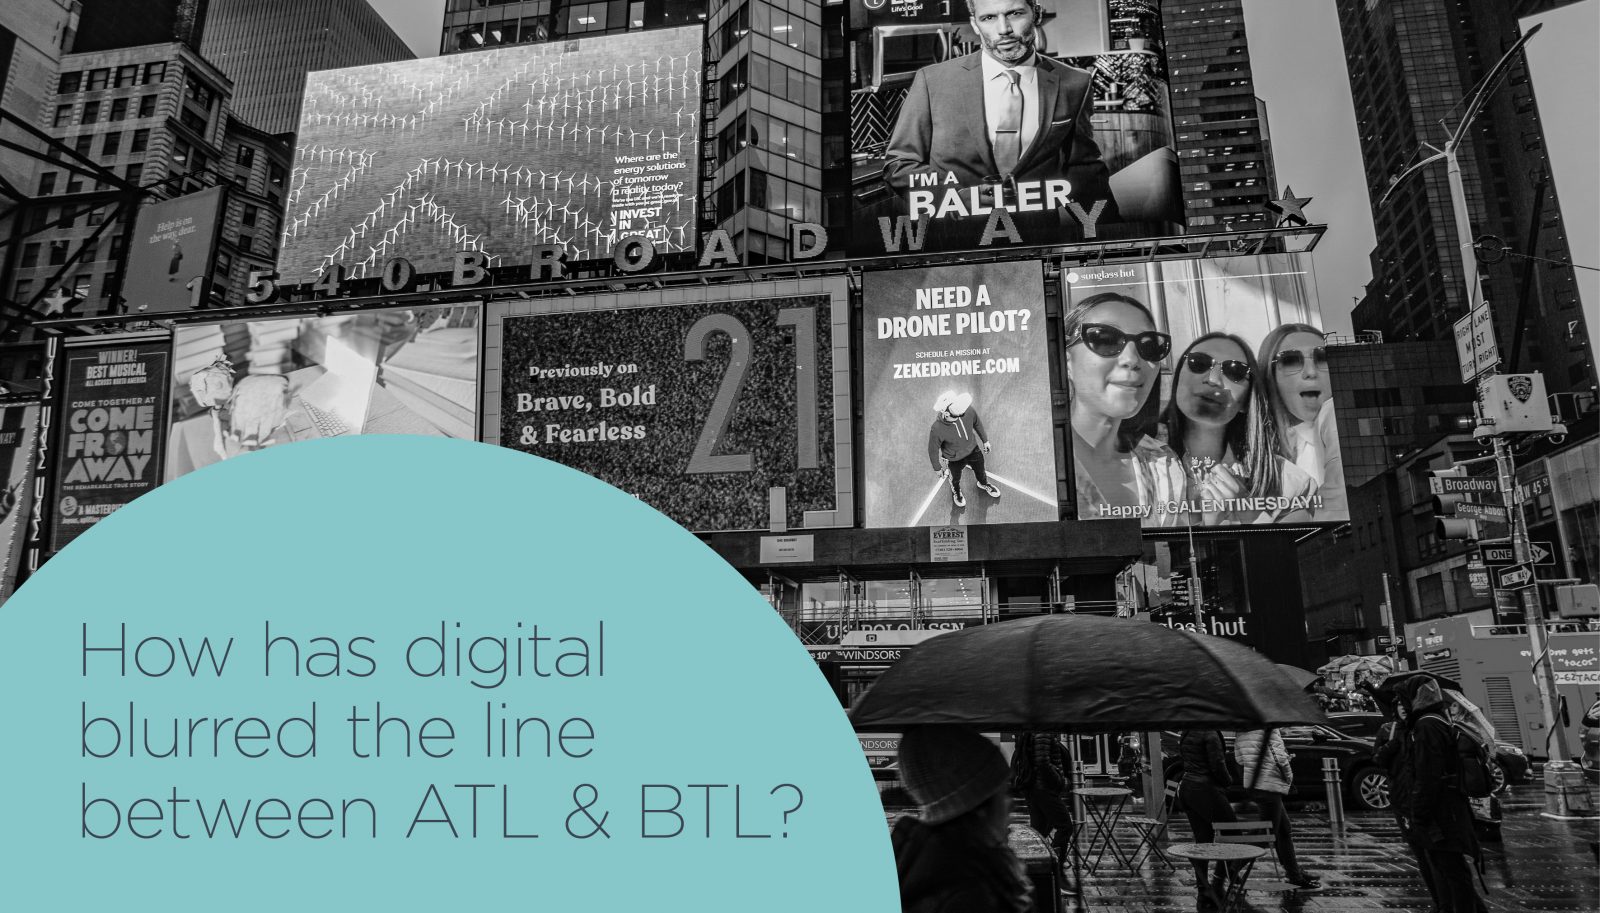 ATL, BTL - How has digital blurred the line?